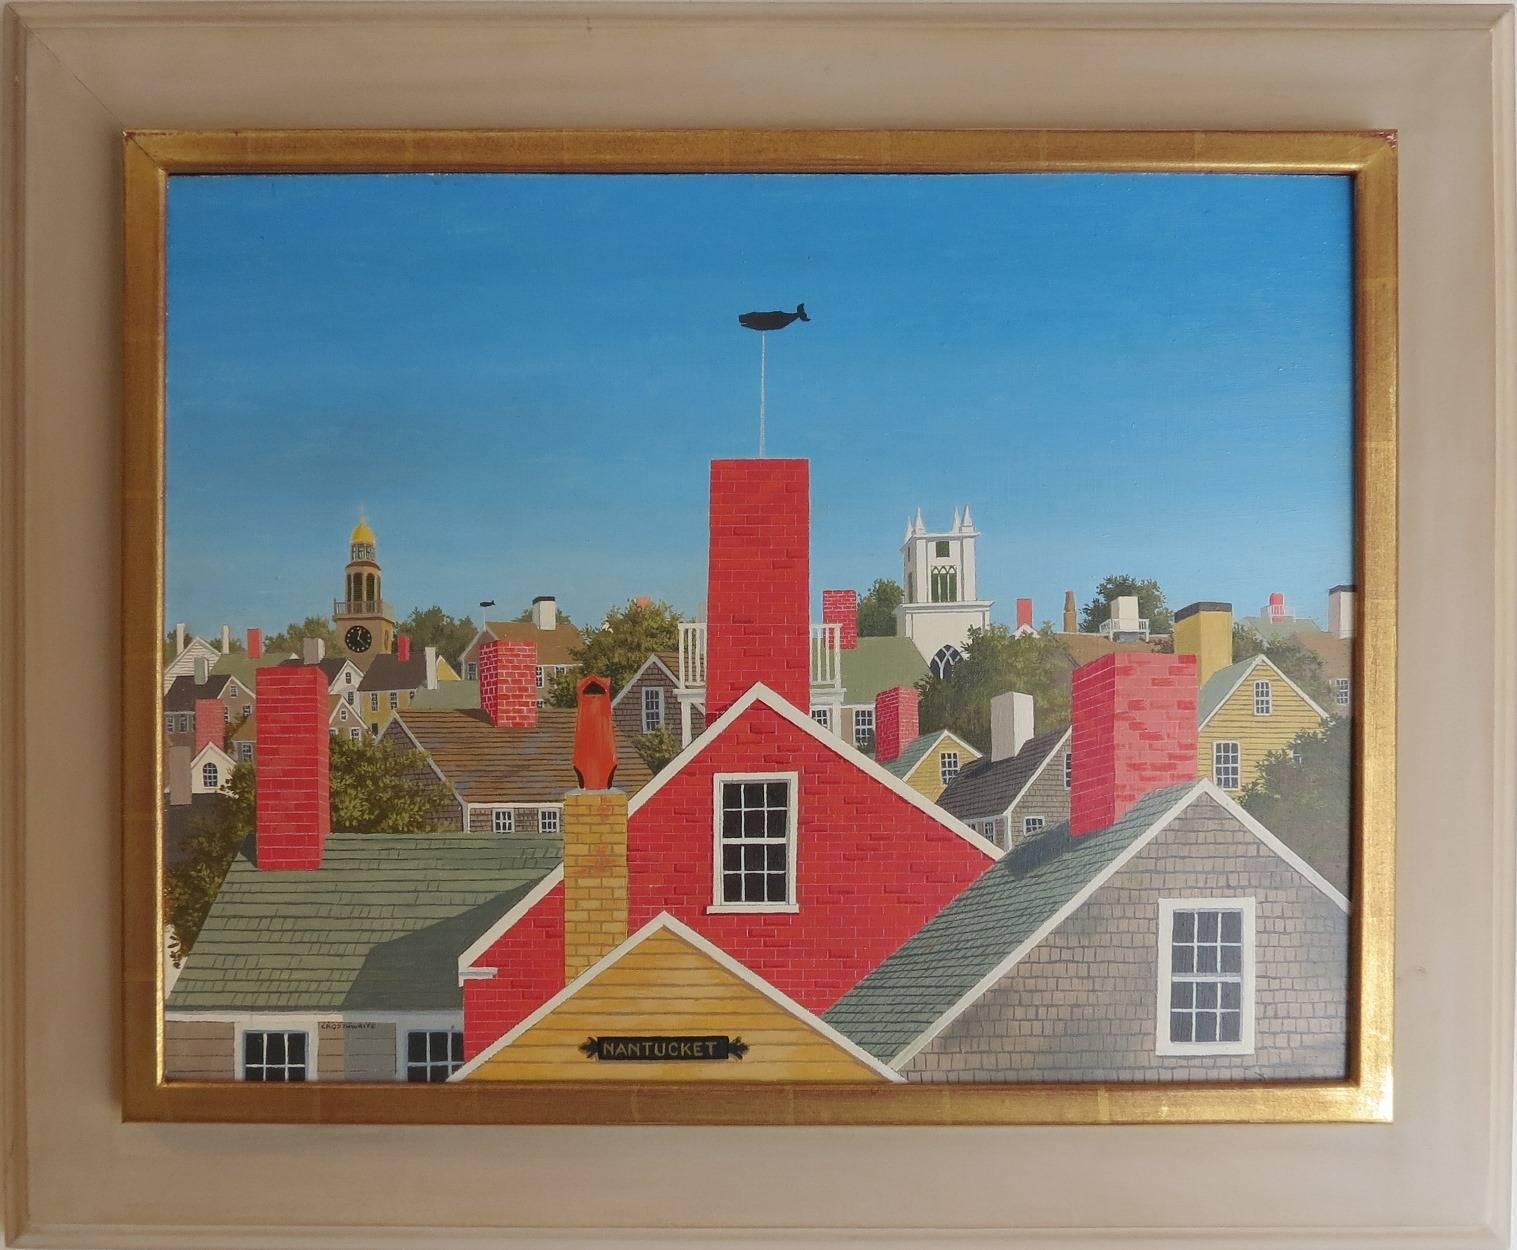 Paul Crosthwaite Landscape Painting - "Nantucket"